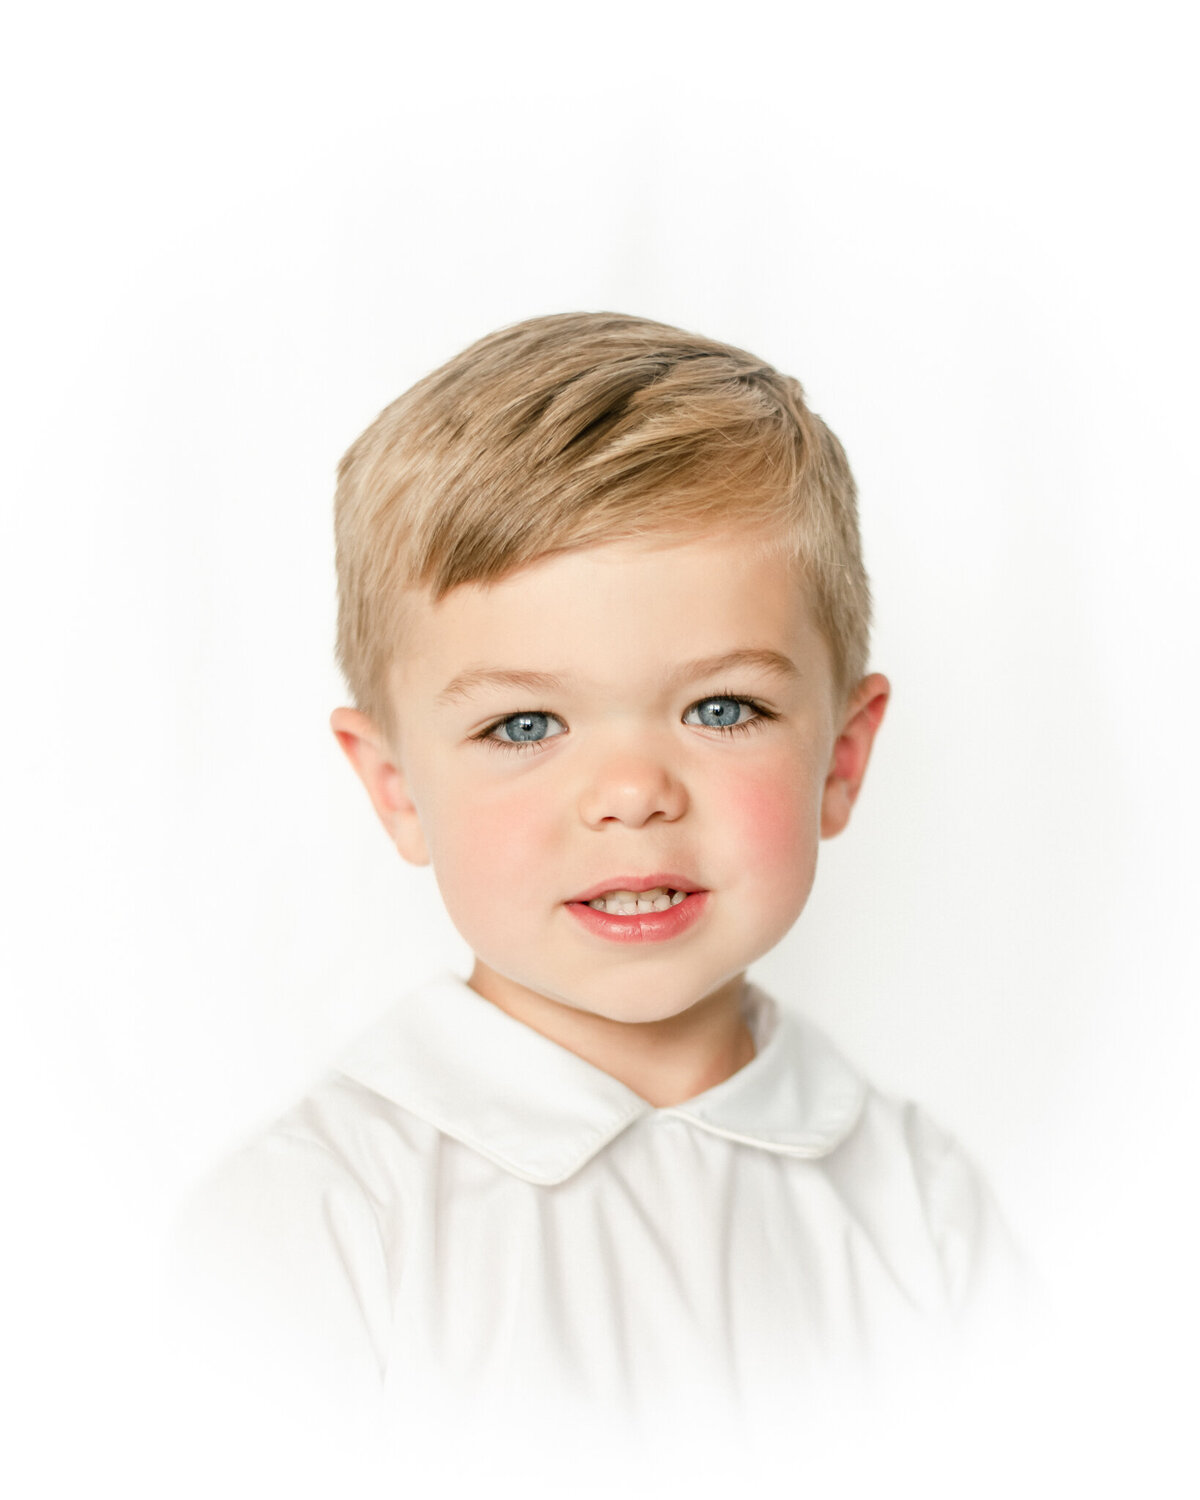 Vignetted portrait of a little boy